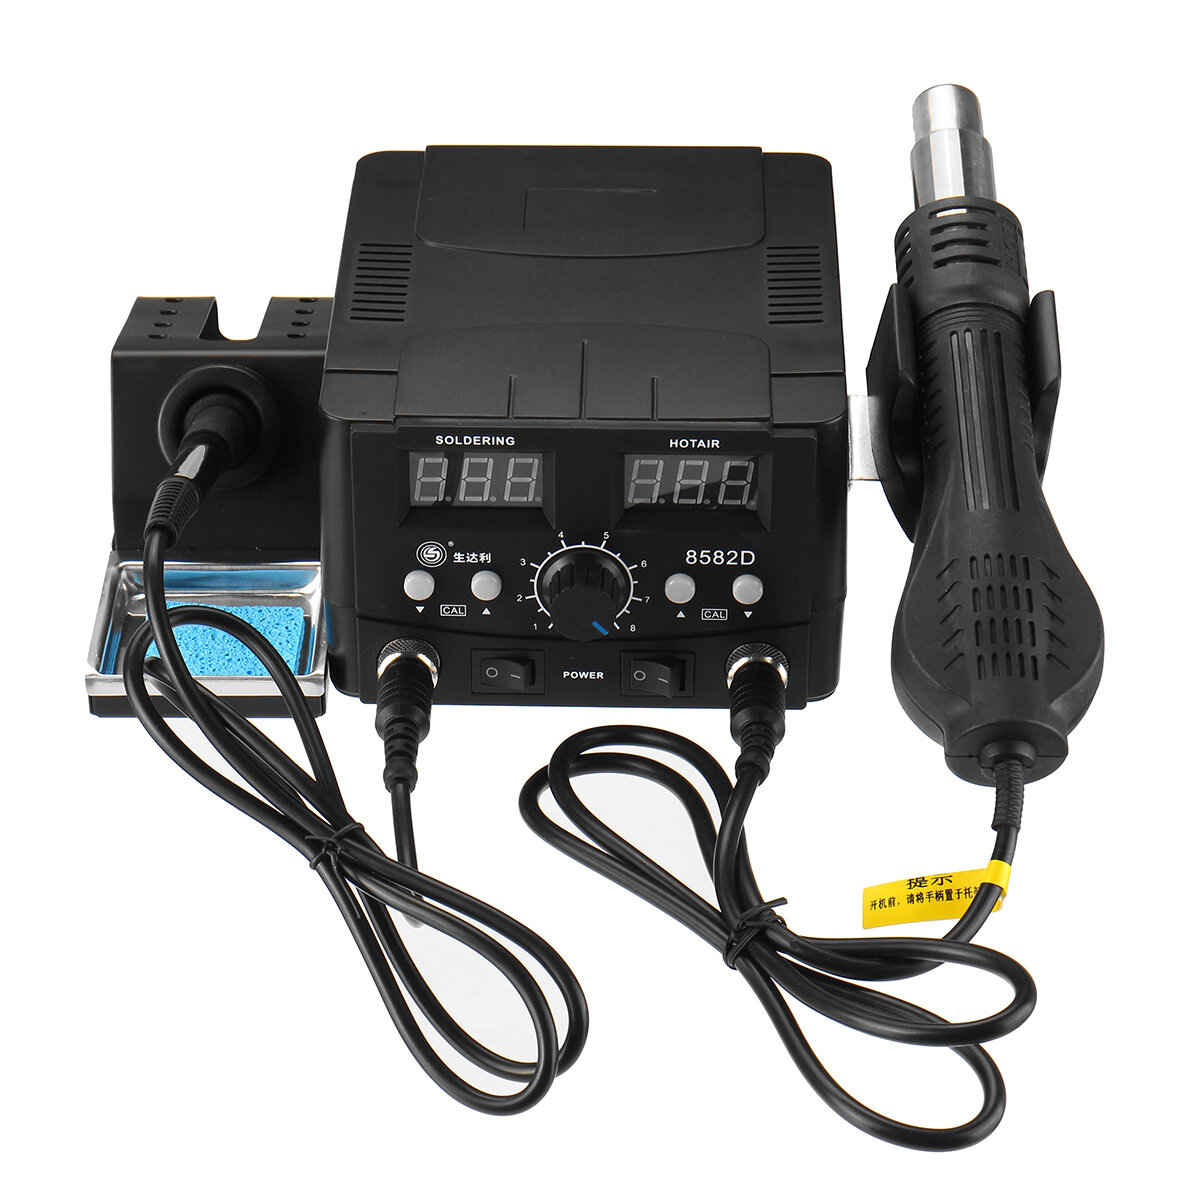 

220V D-8582D 2 in1 Dual Digital Display Soldering Station Iron Solder Rework Station Hot Air Heater